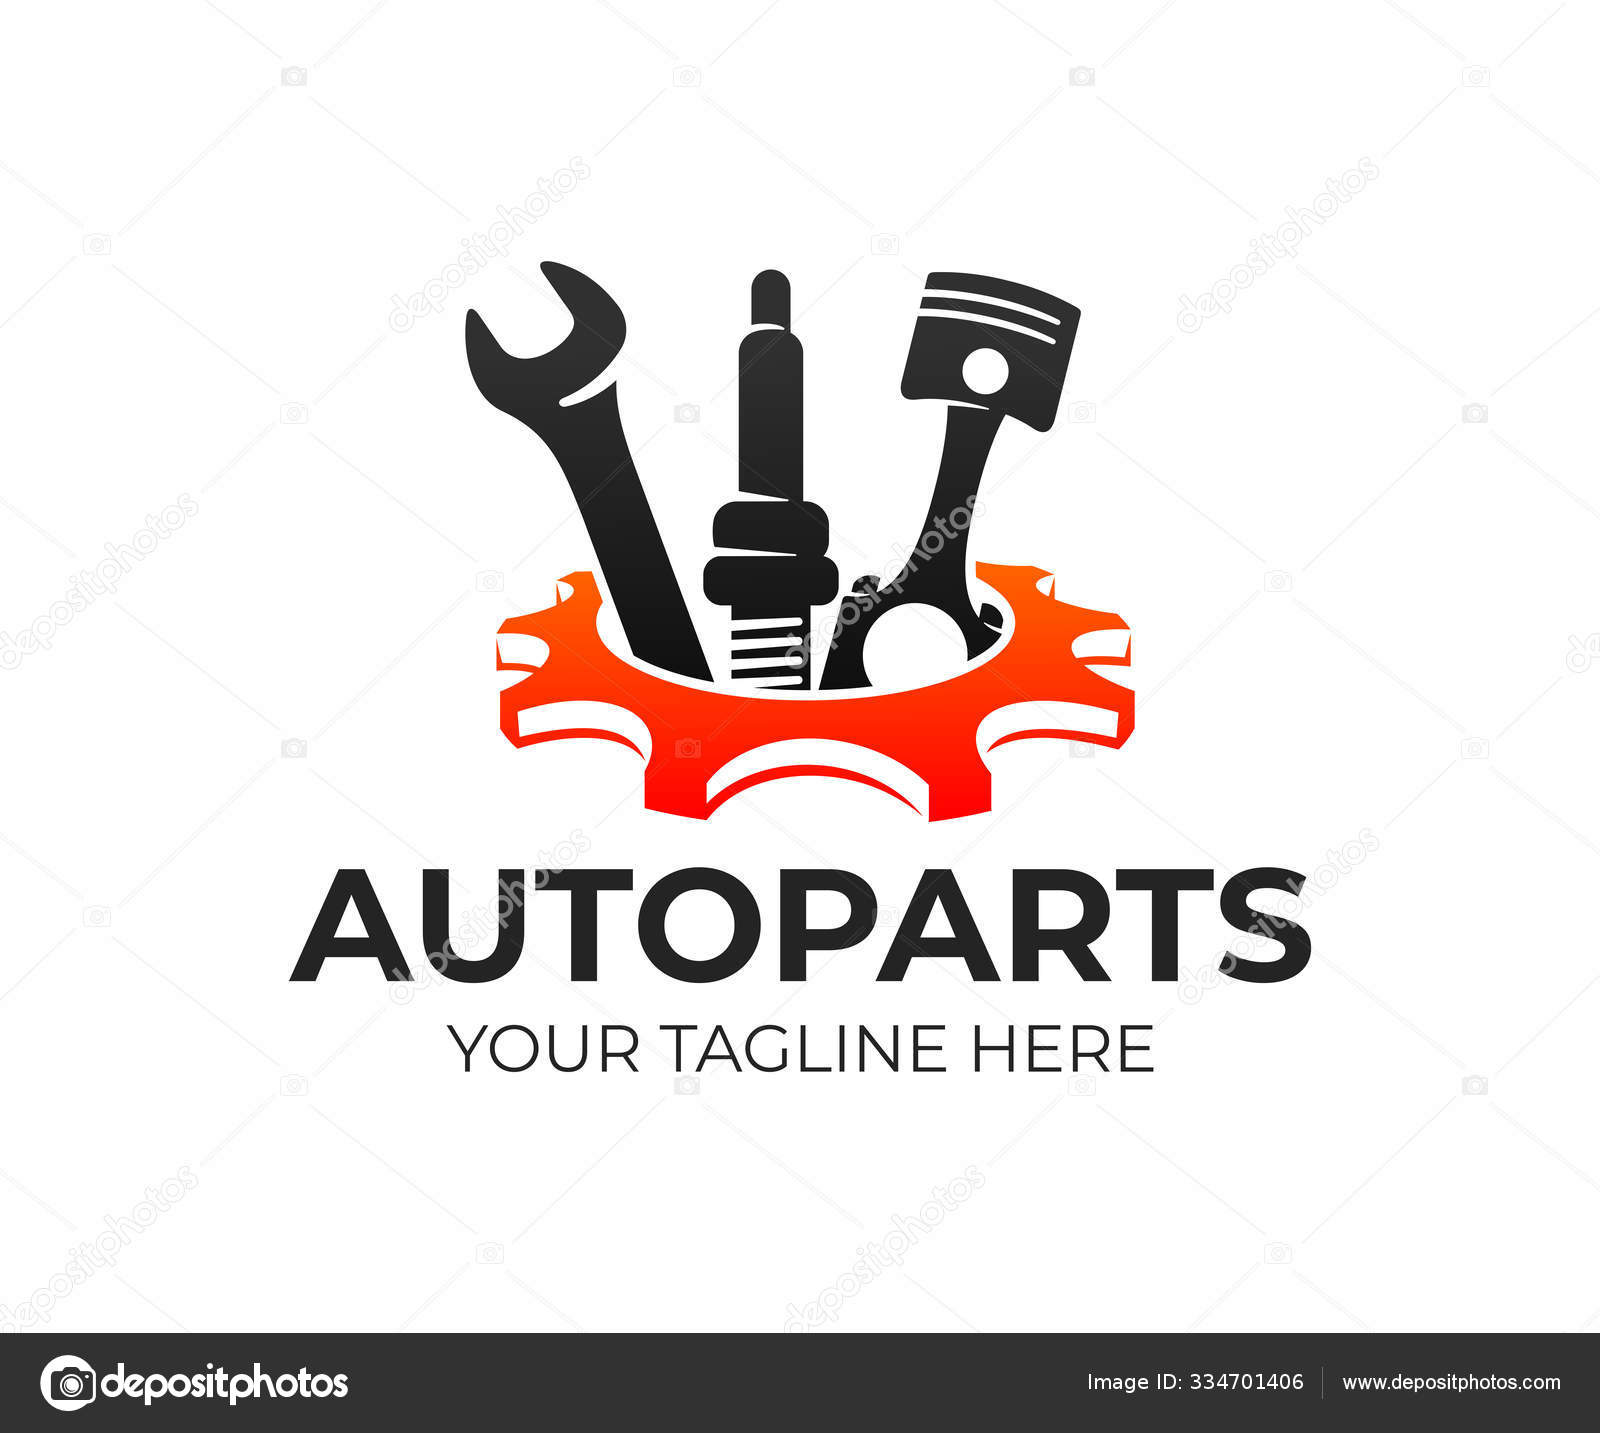 https://st3.depositphotos.com/3284149/33470/v/1600/depositphotos_334701406-stock-illustration-autoparts-gear-auto-piston-spark.jpg